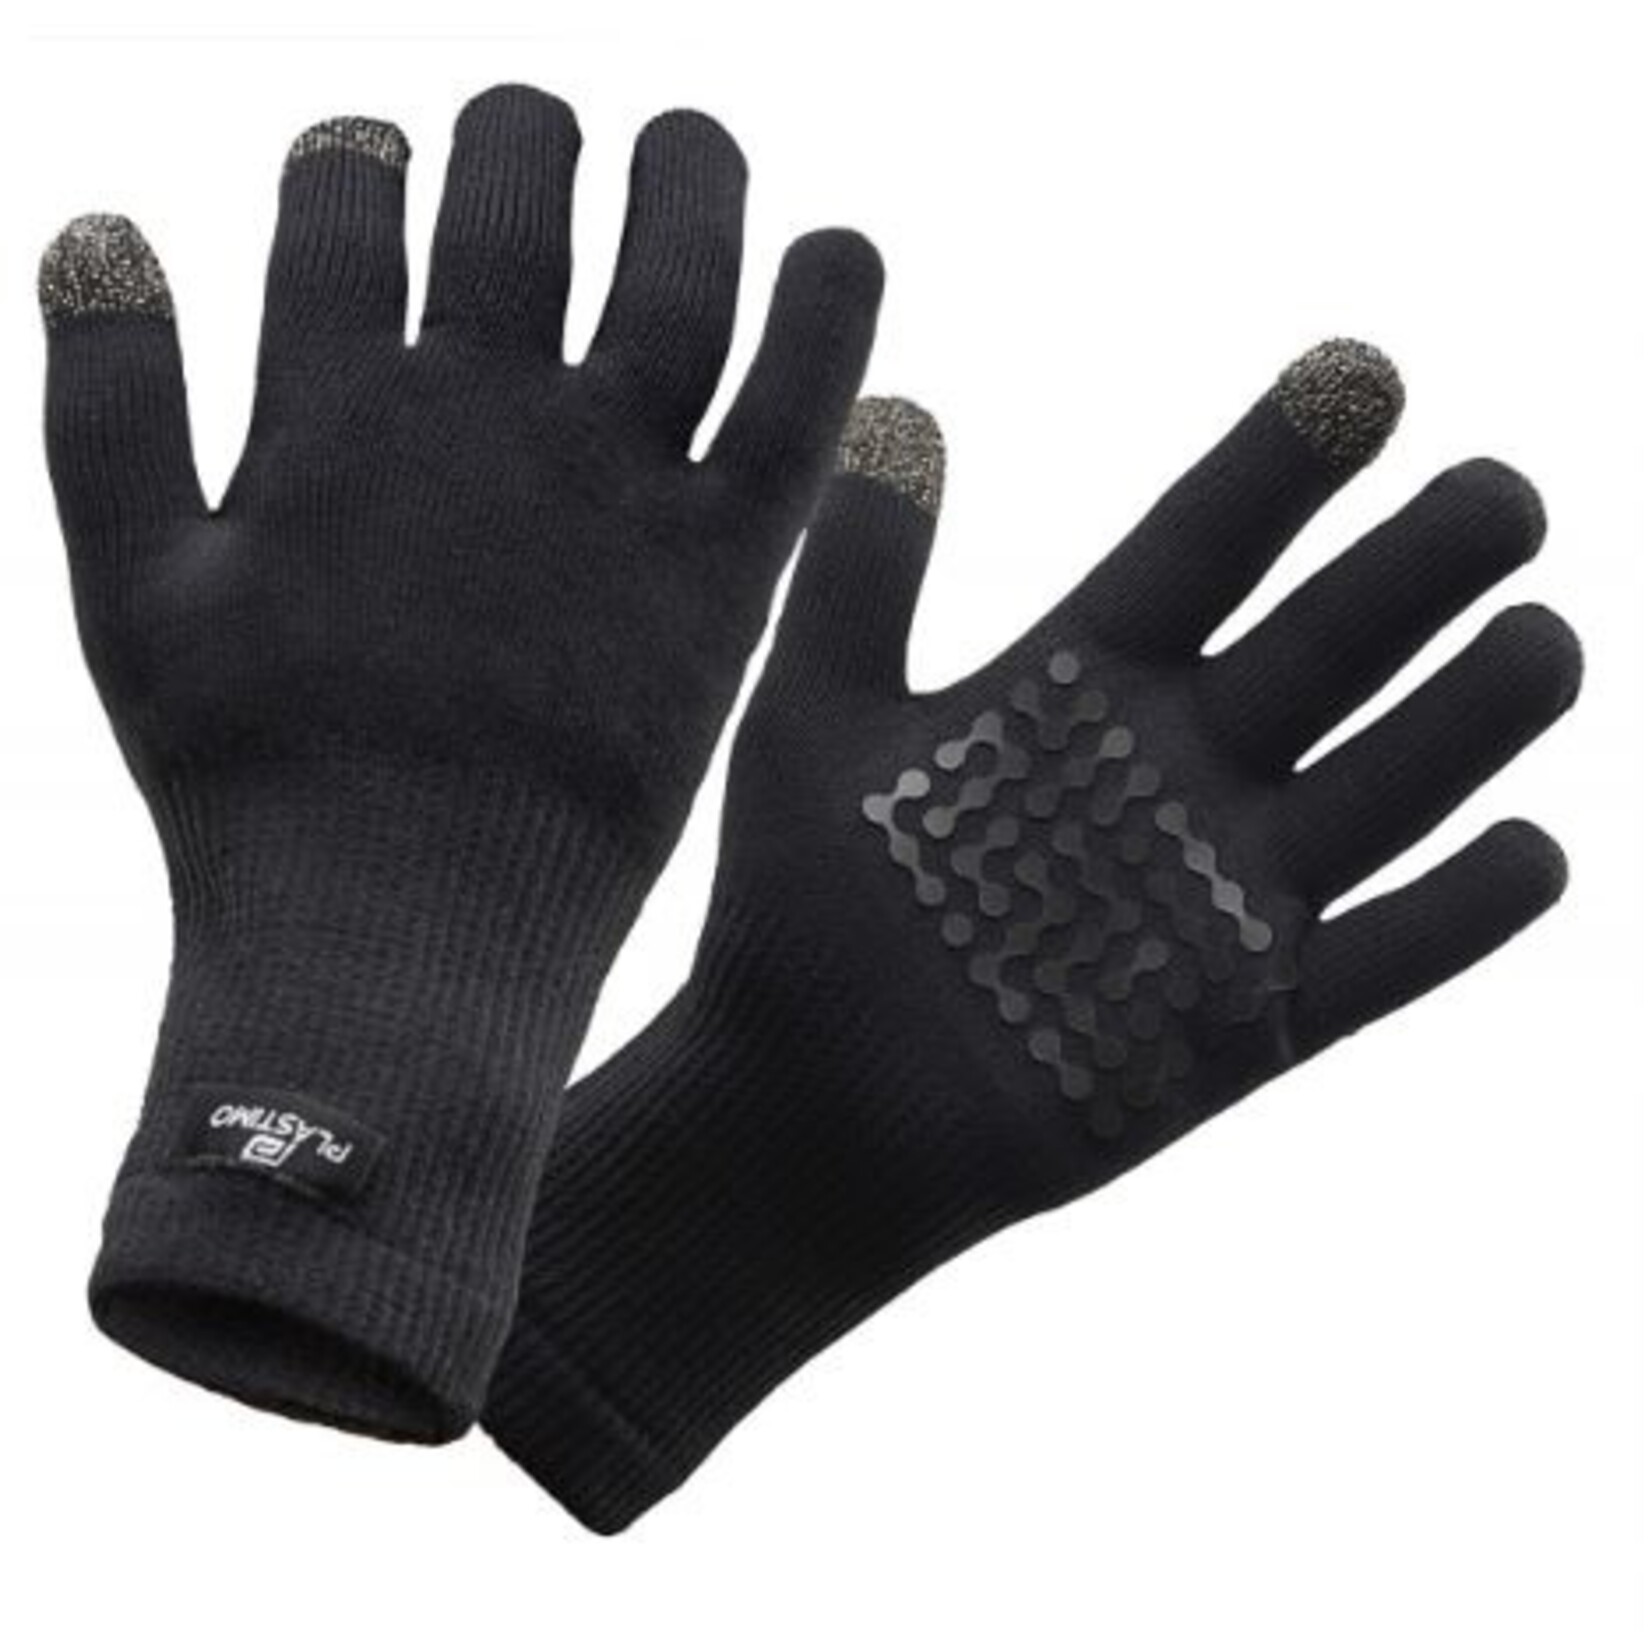 Plastimo Activ waterproof gloves s merino